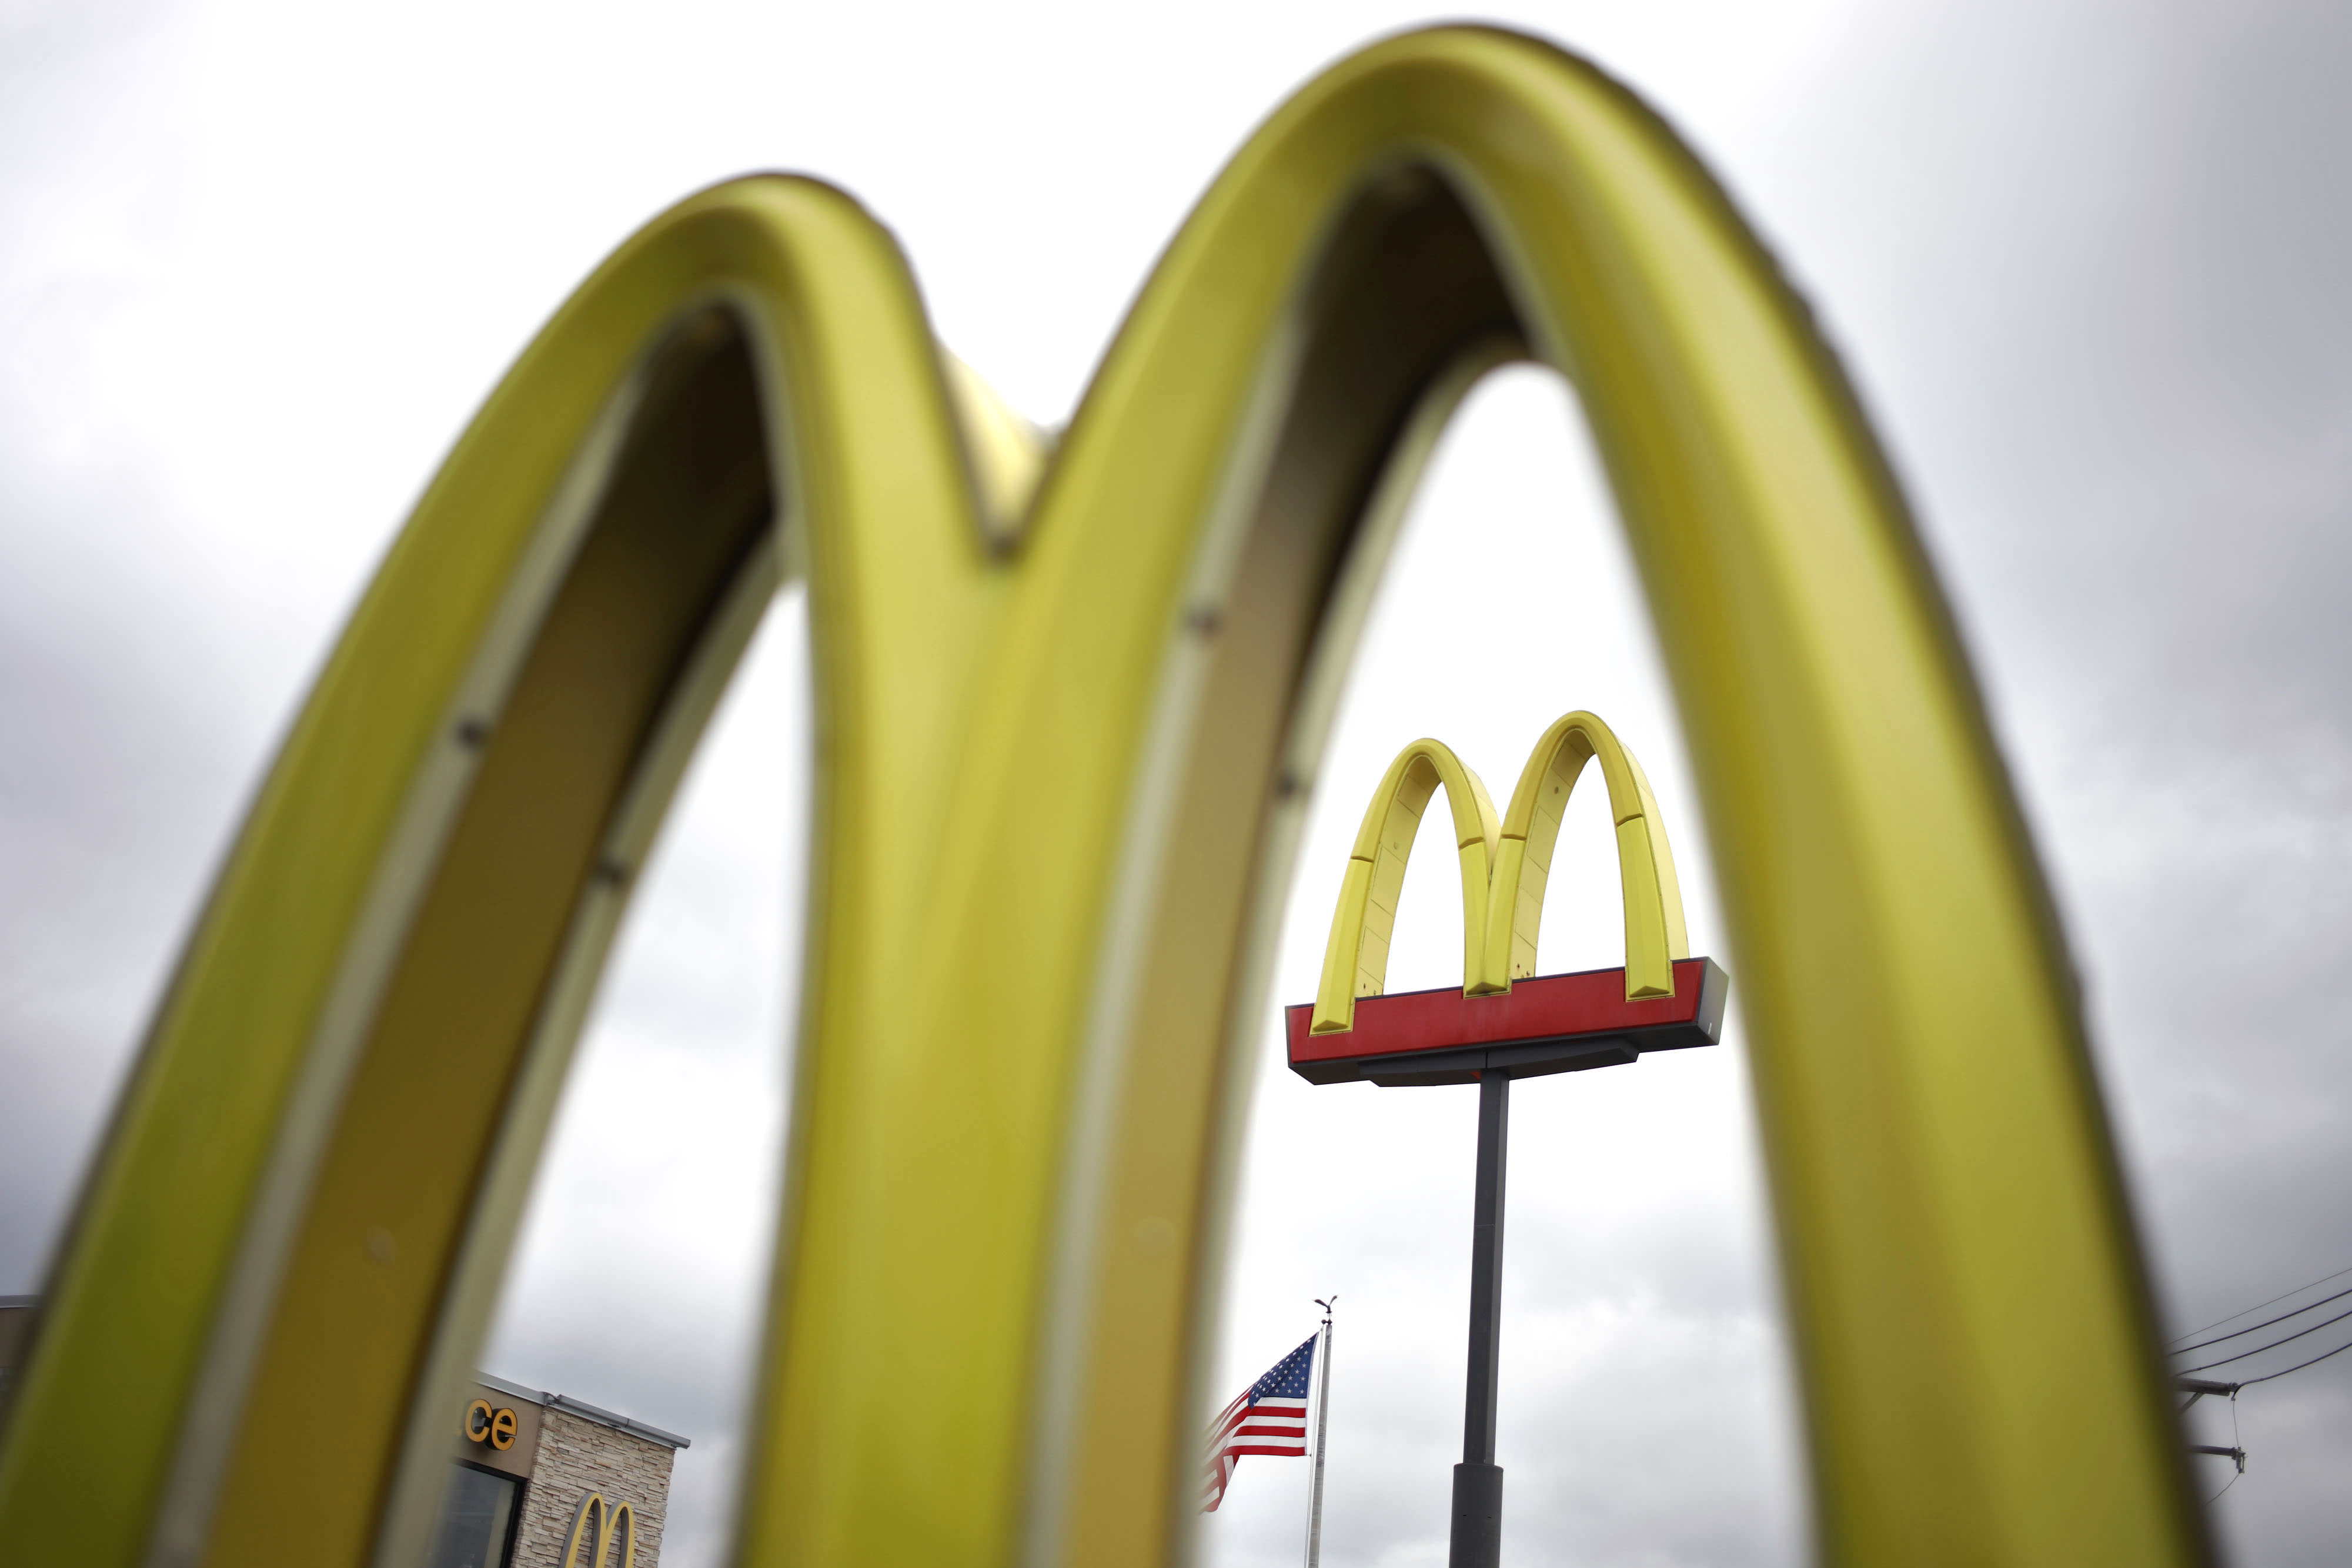 McDonald's (MCD) Q4 2021 earnings miss estimates